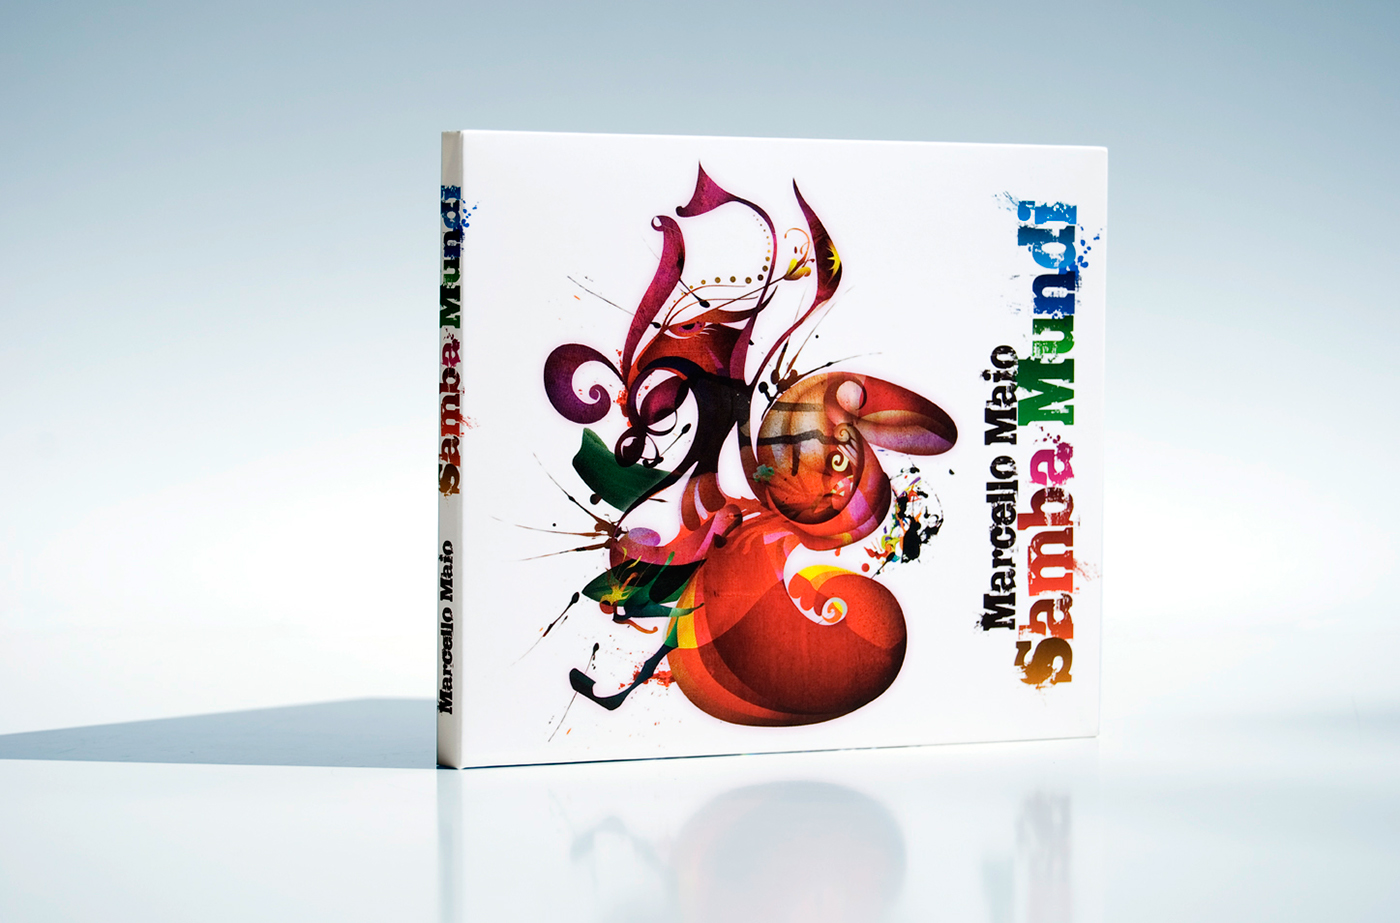 Samba Mundi cd cover samba mundi marcello maio ploovia designs by piero salardi album cover Music cover packaging design